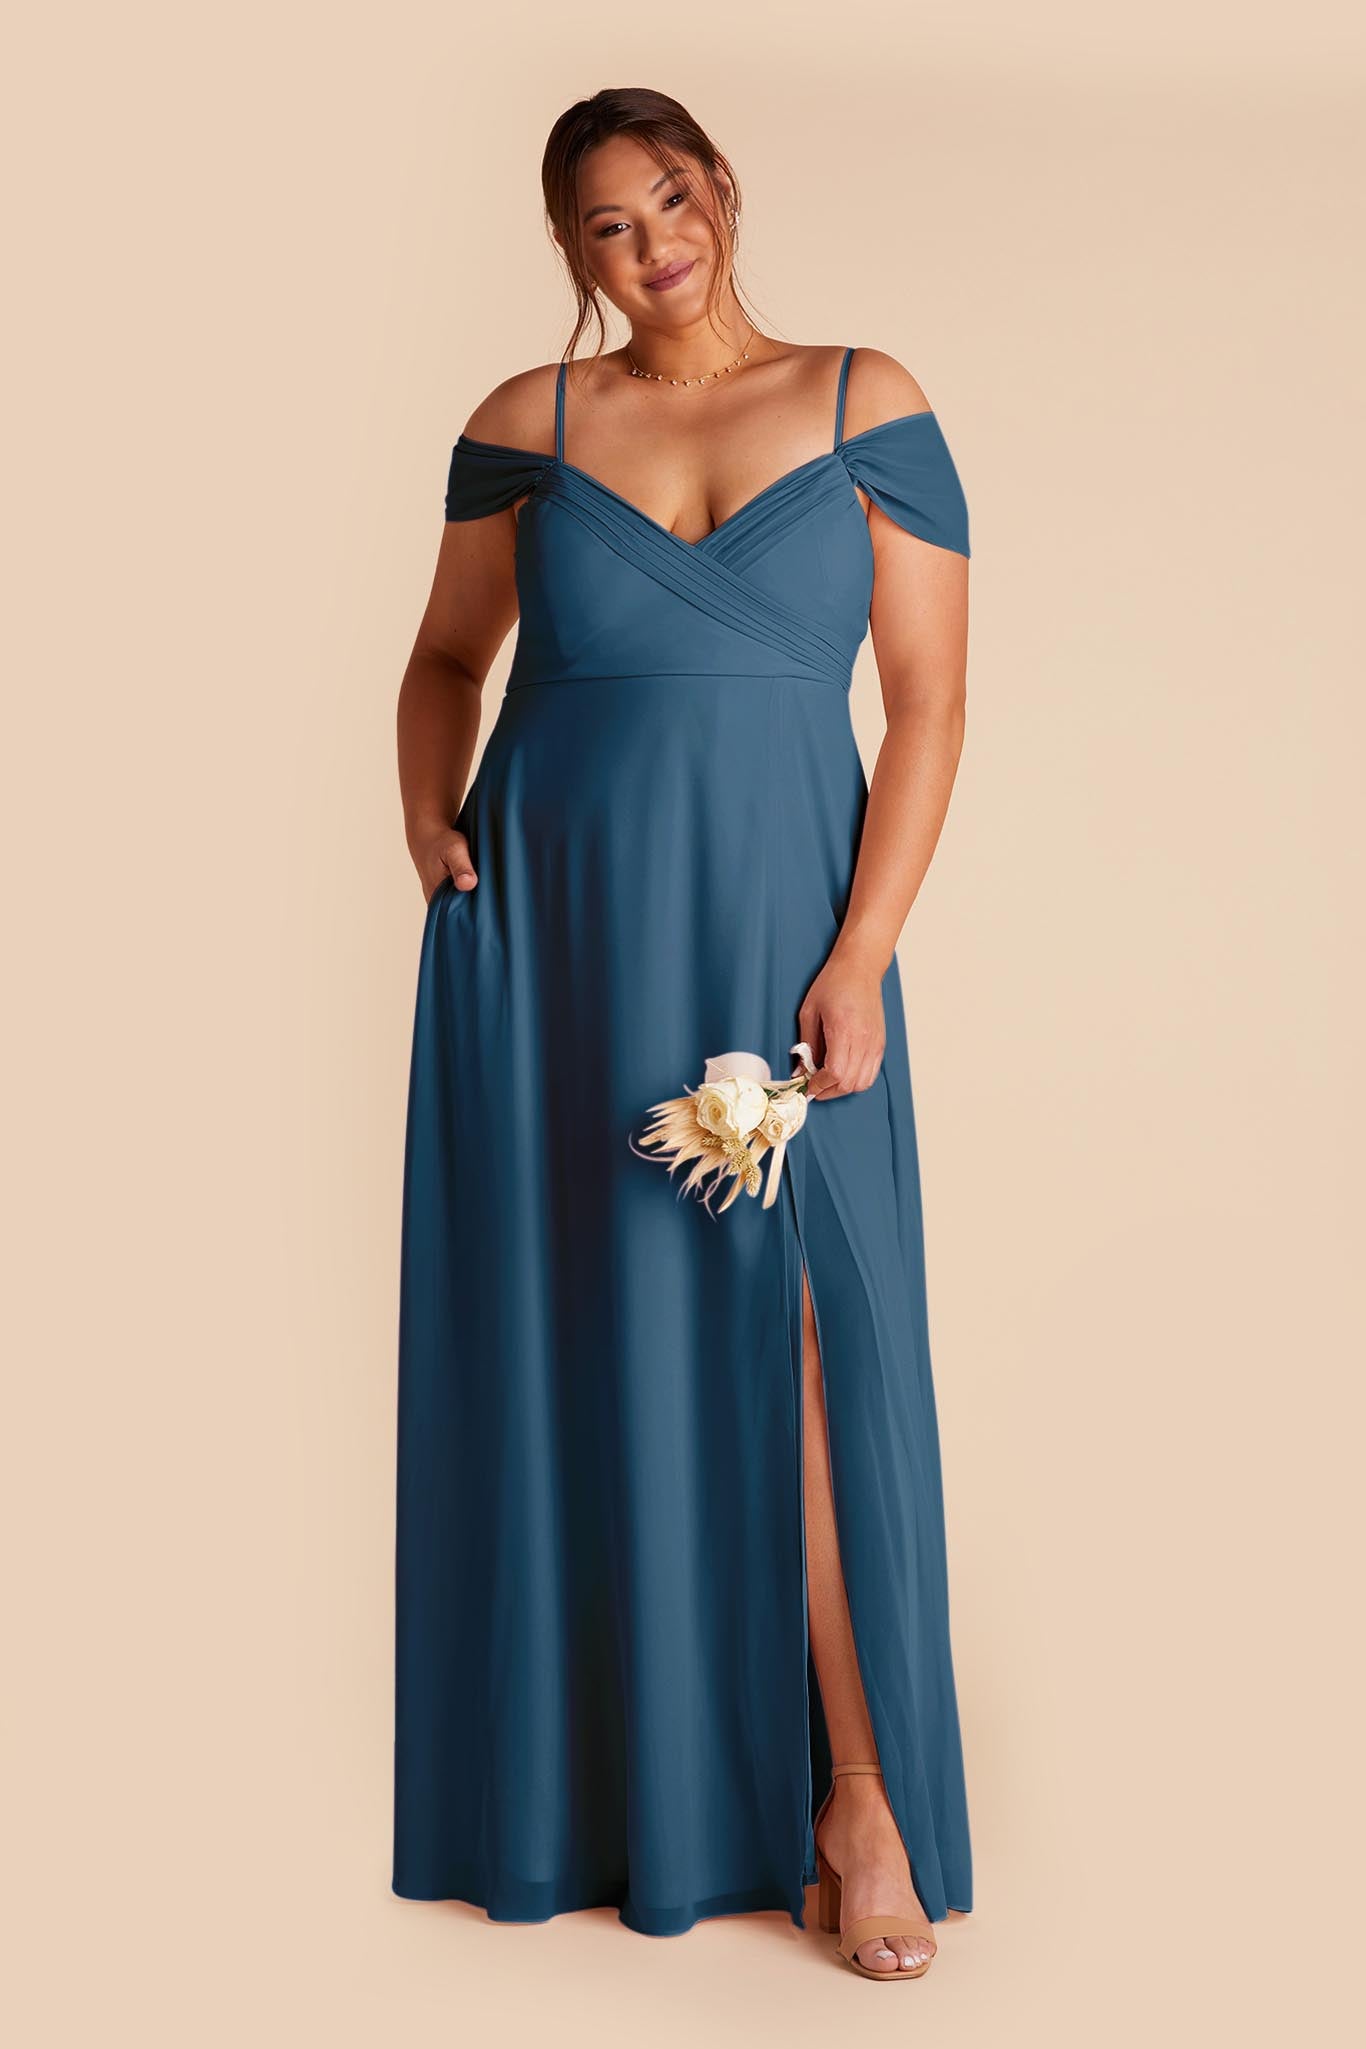 Ocean Blue Spence Convertible Dress by Birdy Grey